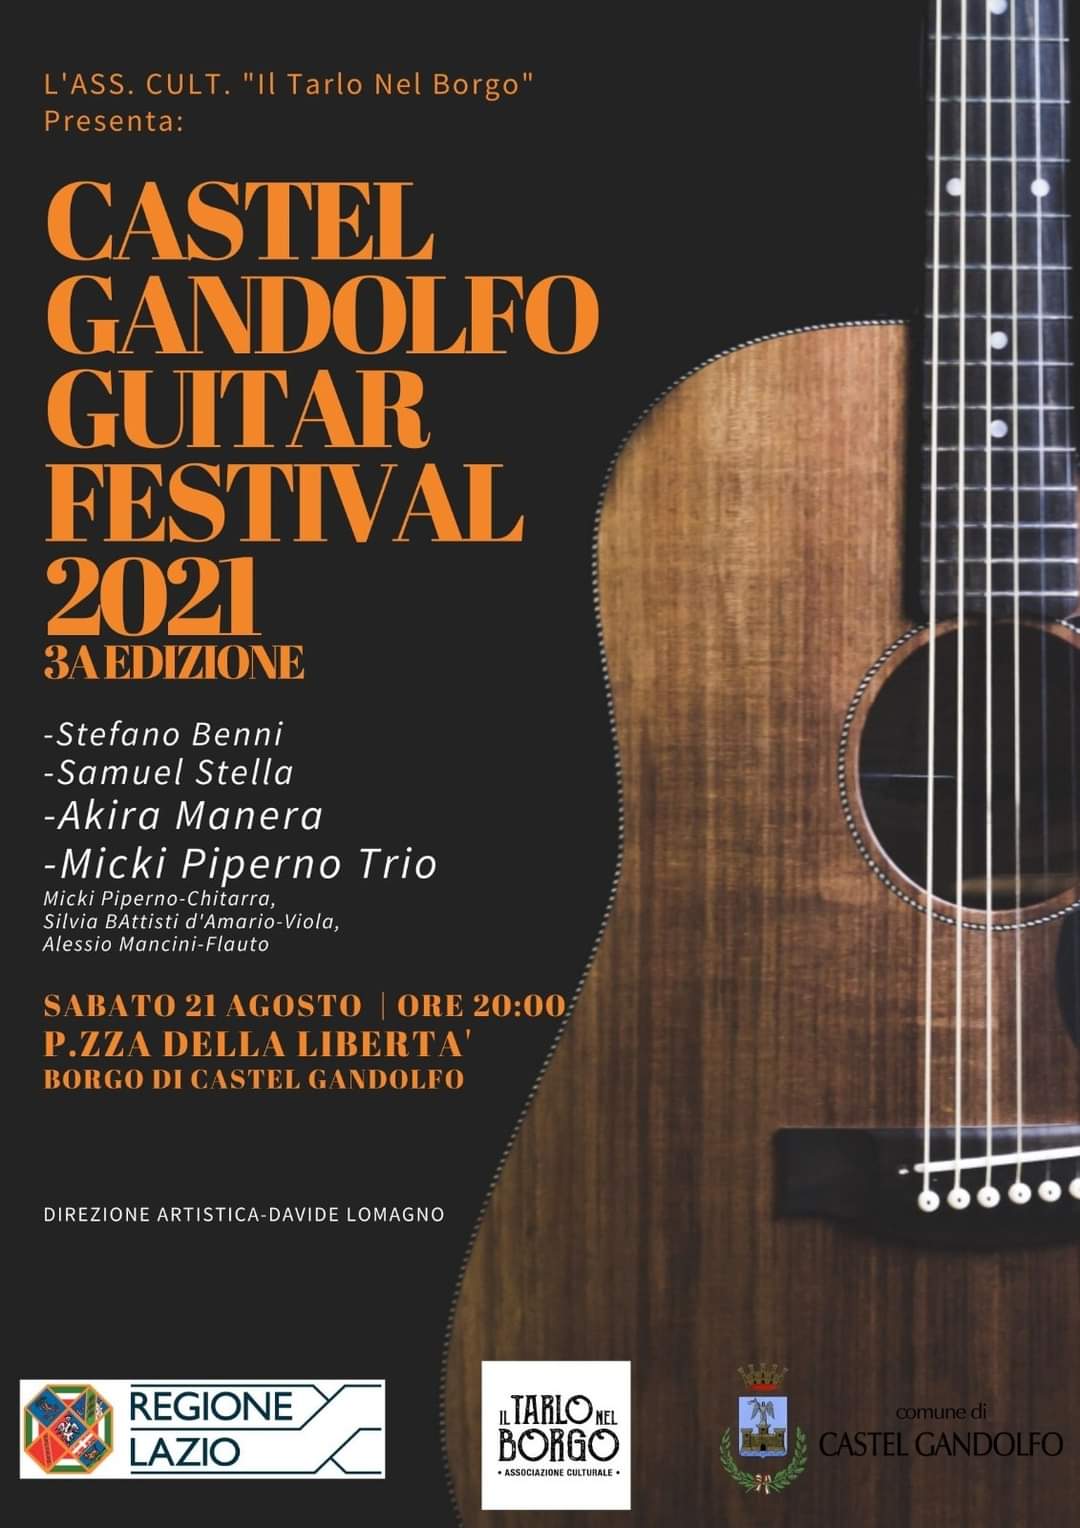 Guitar Festival